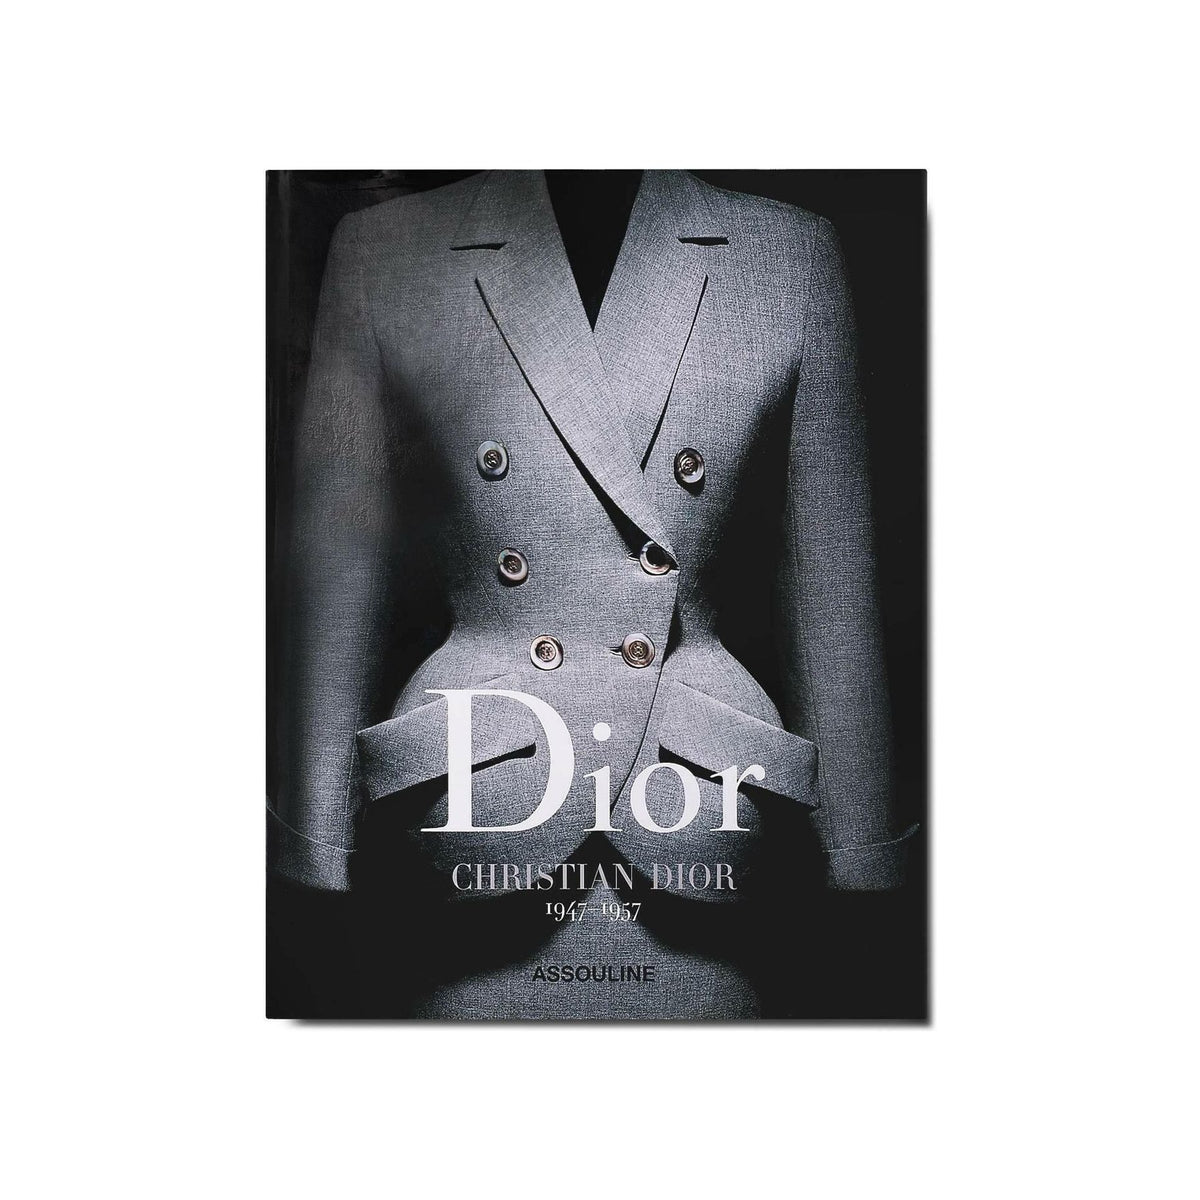 Dior By Christian Dior 1947 1957 ASSOULINE JOHN JULIA.